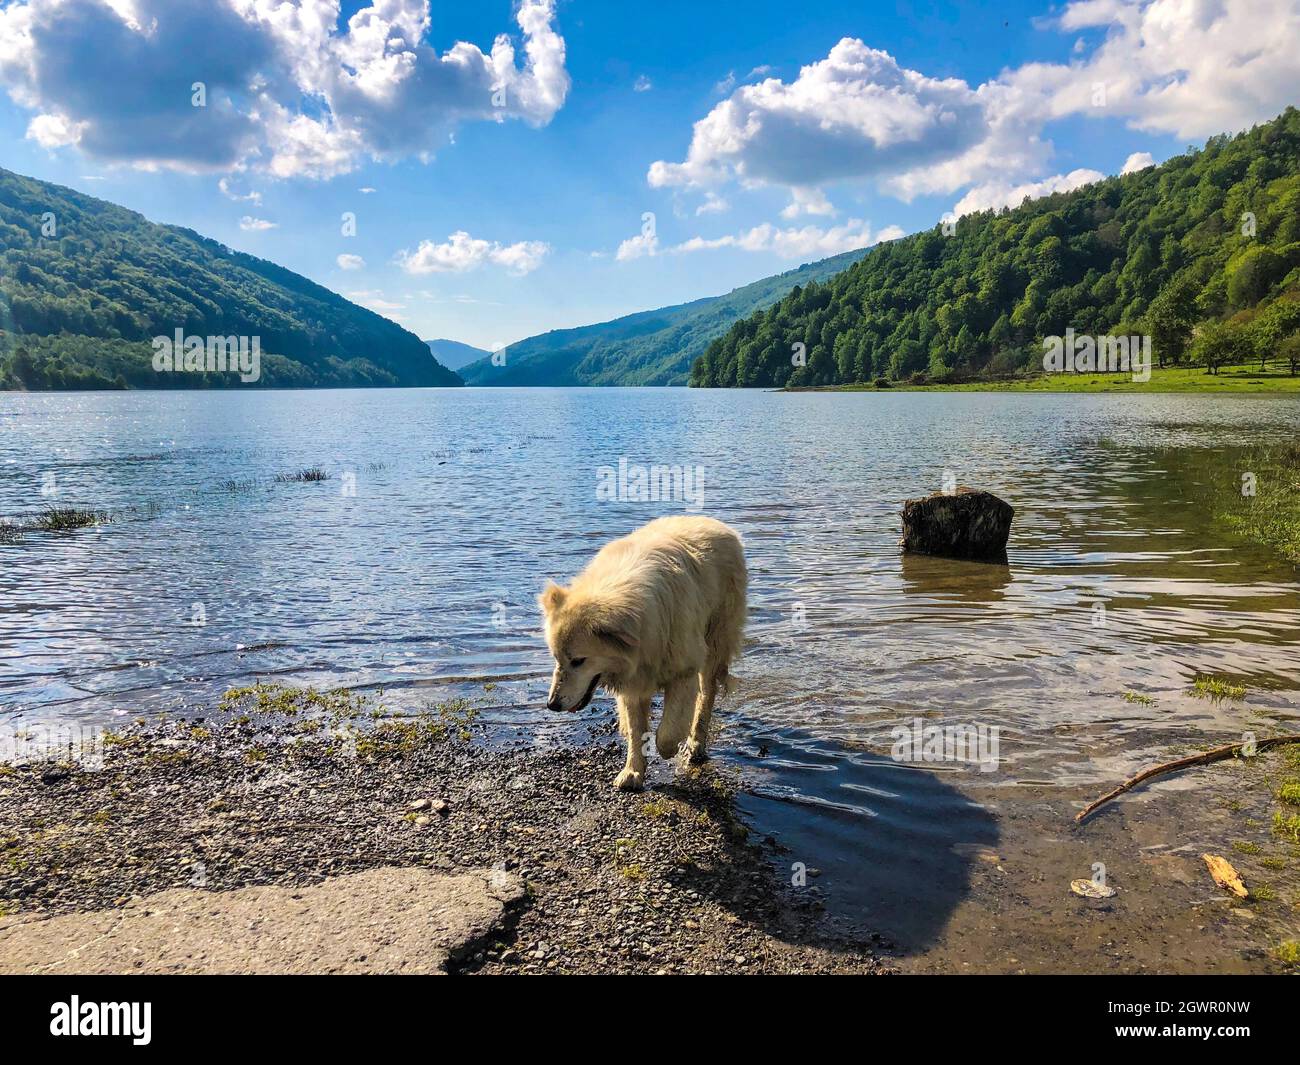 Big White Dog Standing Near The Lake In An Idyllic Location Stock Photo